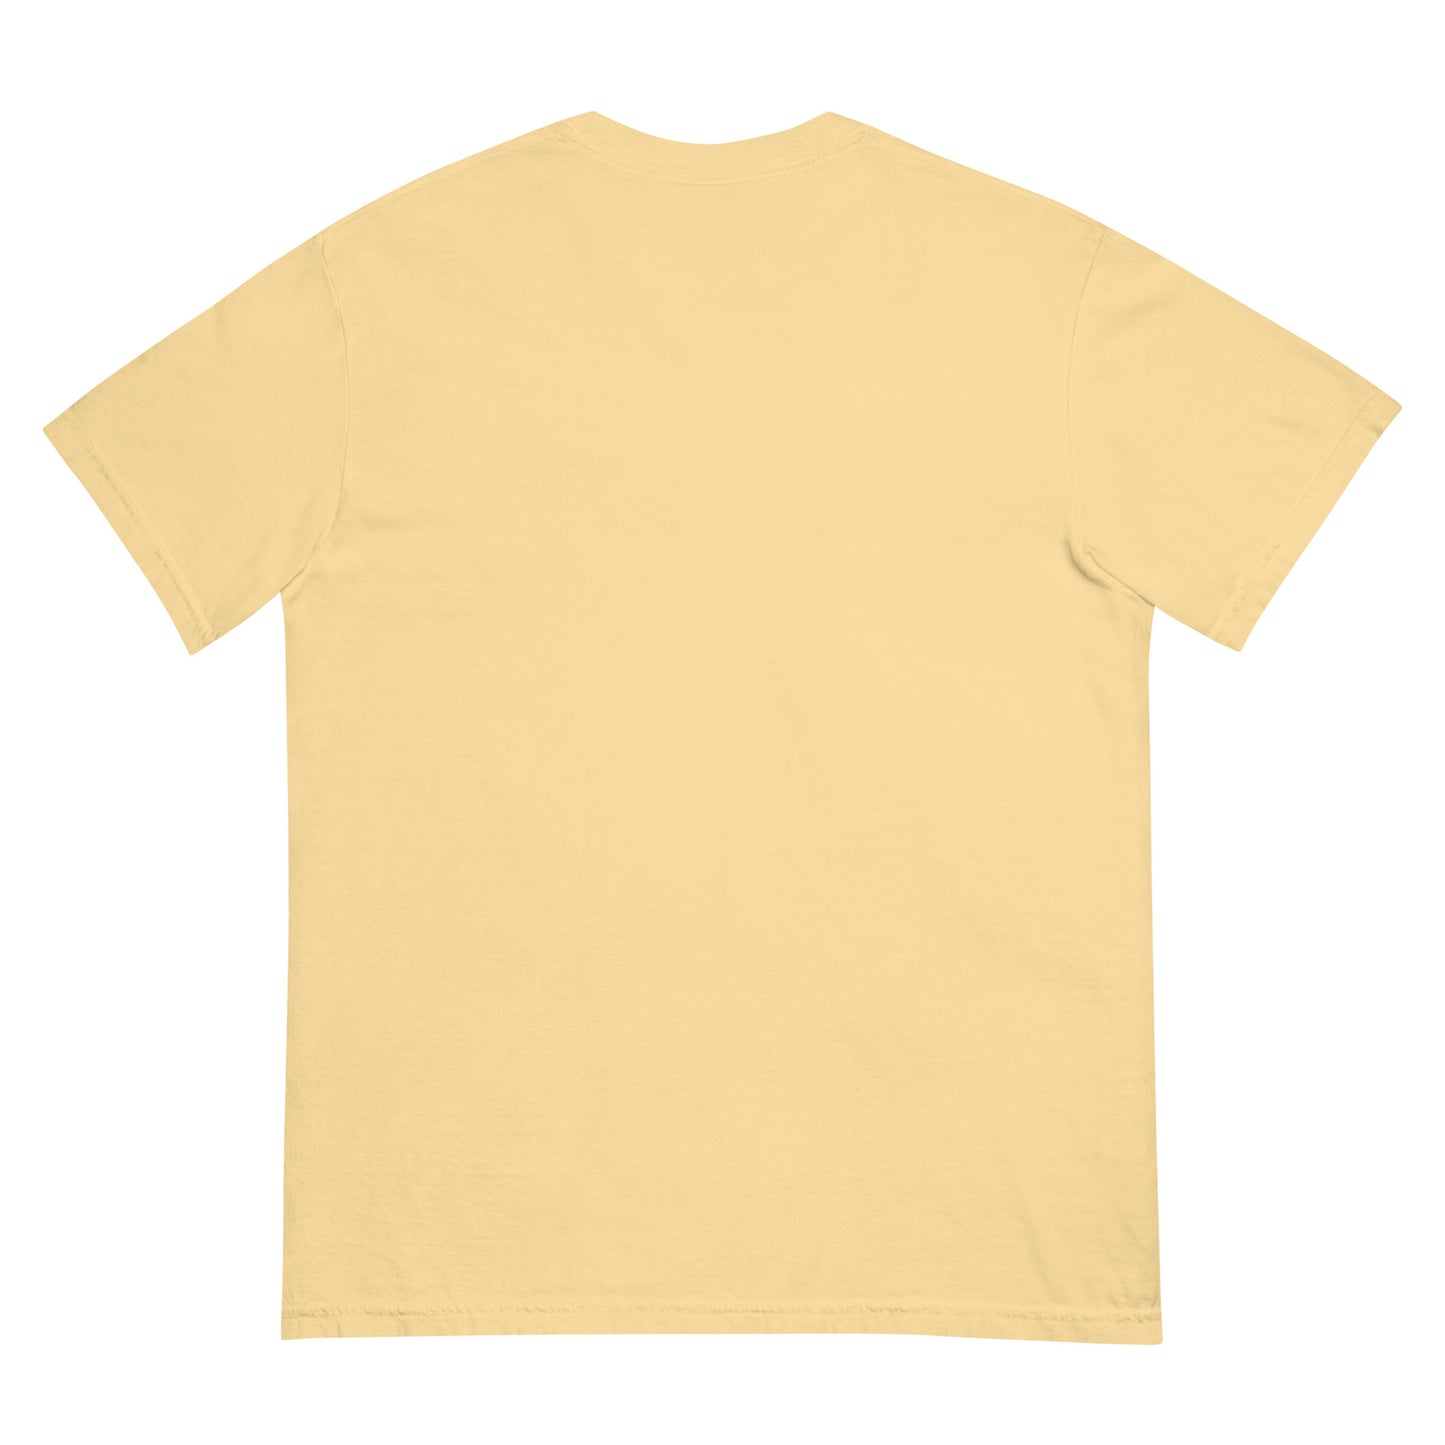 Unisex graphic T-shirt, Kitty skateboard T-shirt, Funny T-shirts